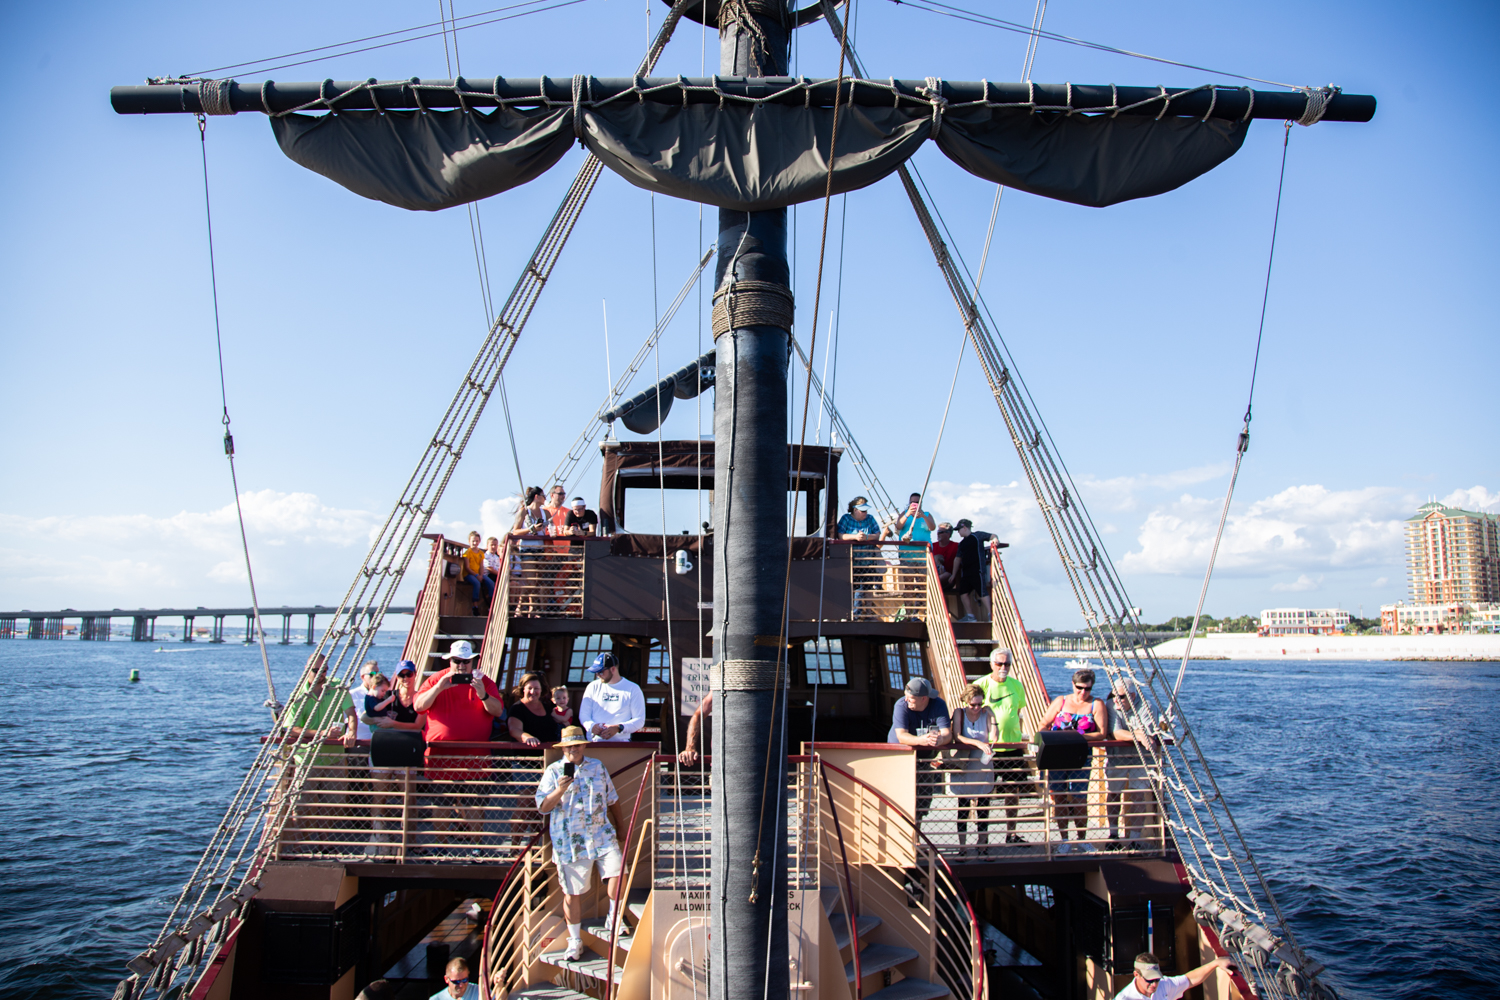 Buccaneer Destin Pirate Ship - Things To Do in Destin Florida